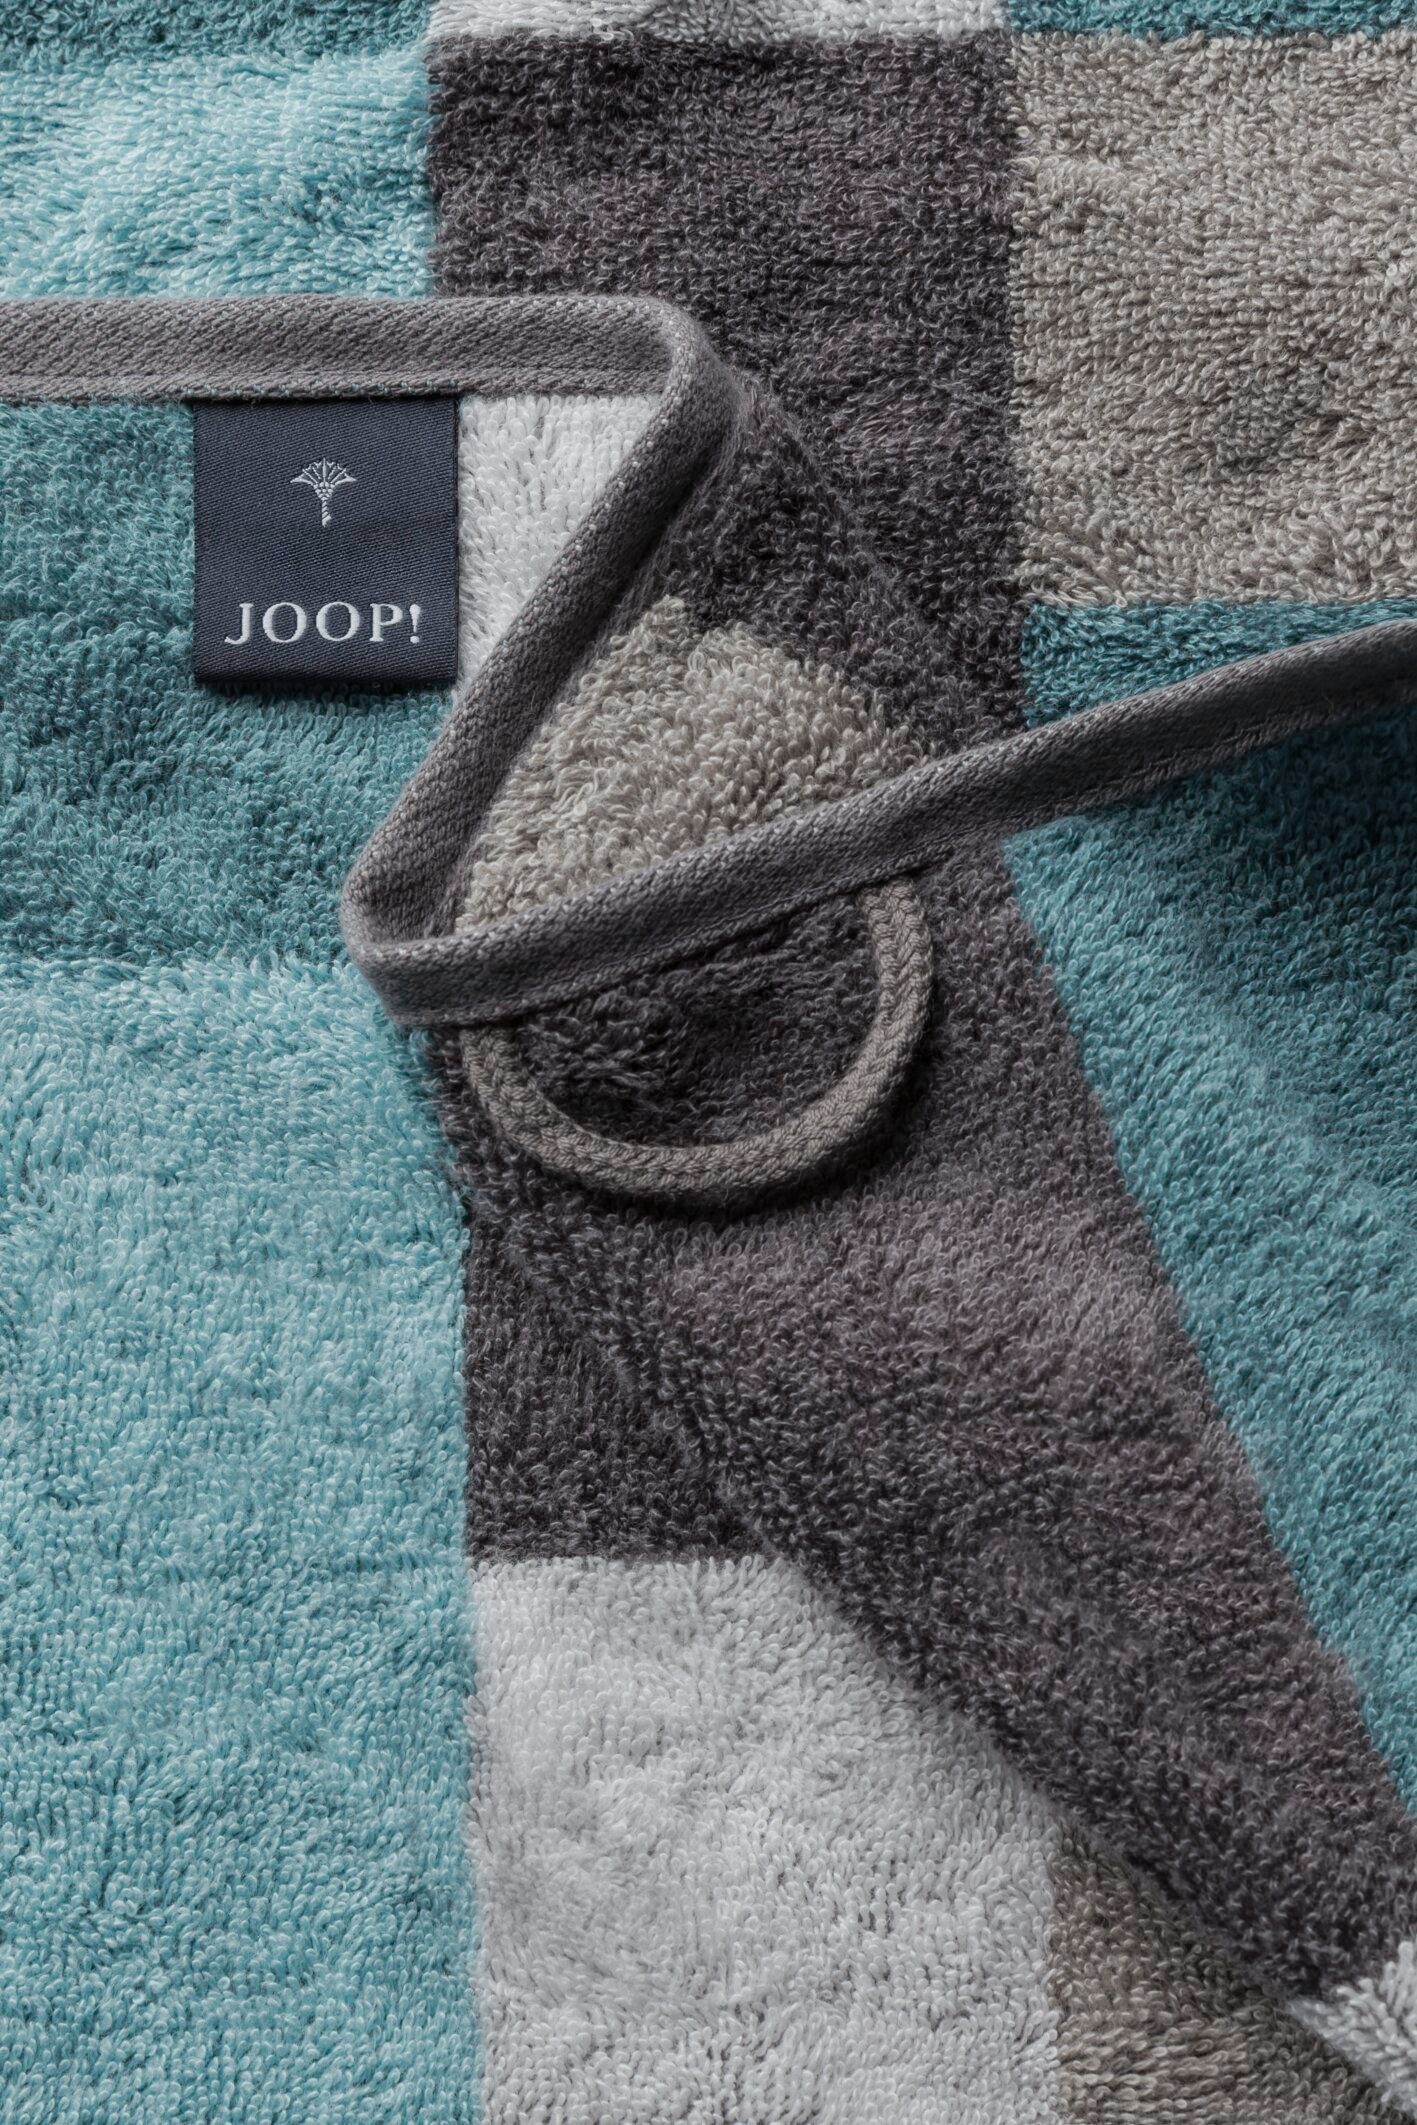 Textil Handtücher - LIVING (2-St) Graphite MOSAIC INFINITY Joop! Handtuch-Set, JOOP!